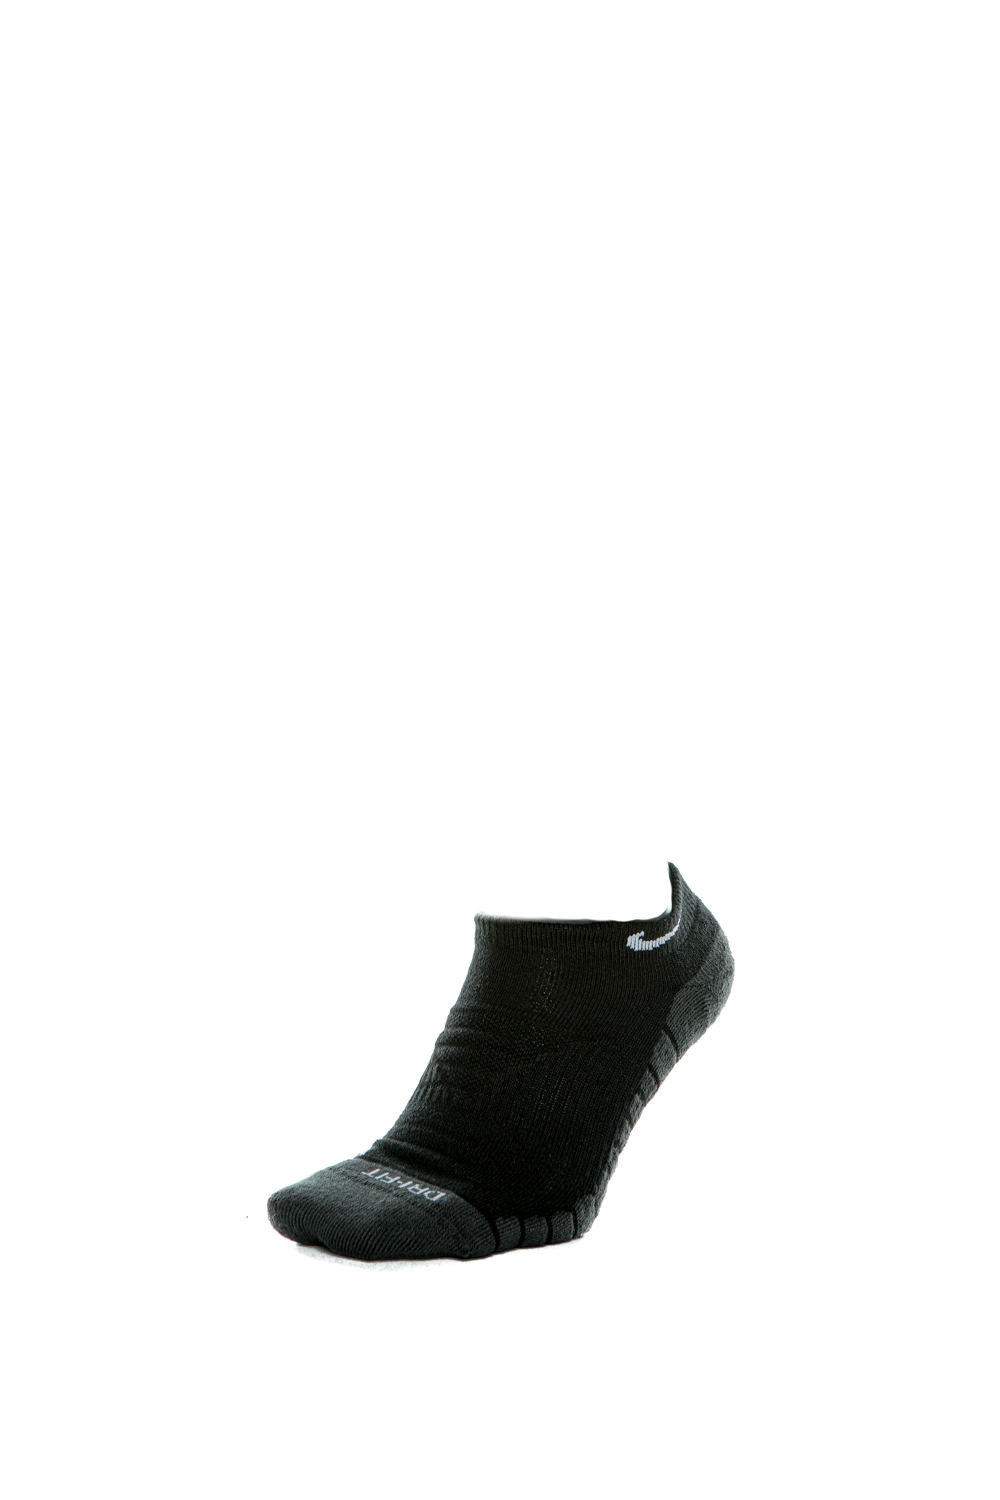 NIKE – Unisex κάλτσες σετ των 3 ΝΙΚΕ EVRY MAX CUSH NS μαύρες 1730580.1-7180